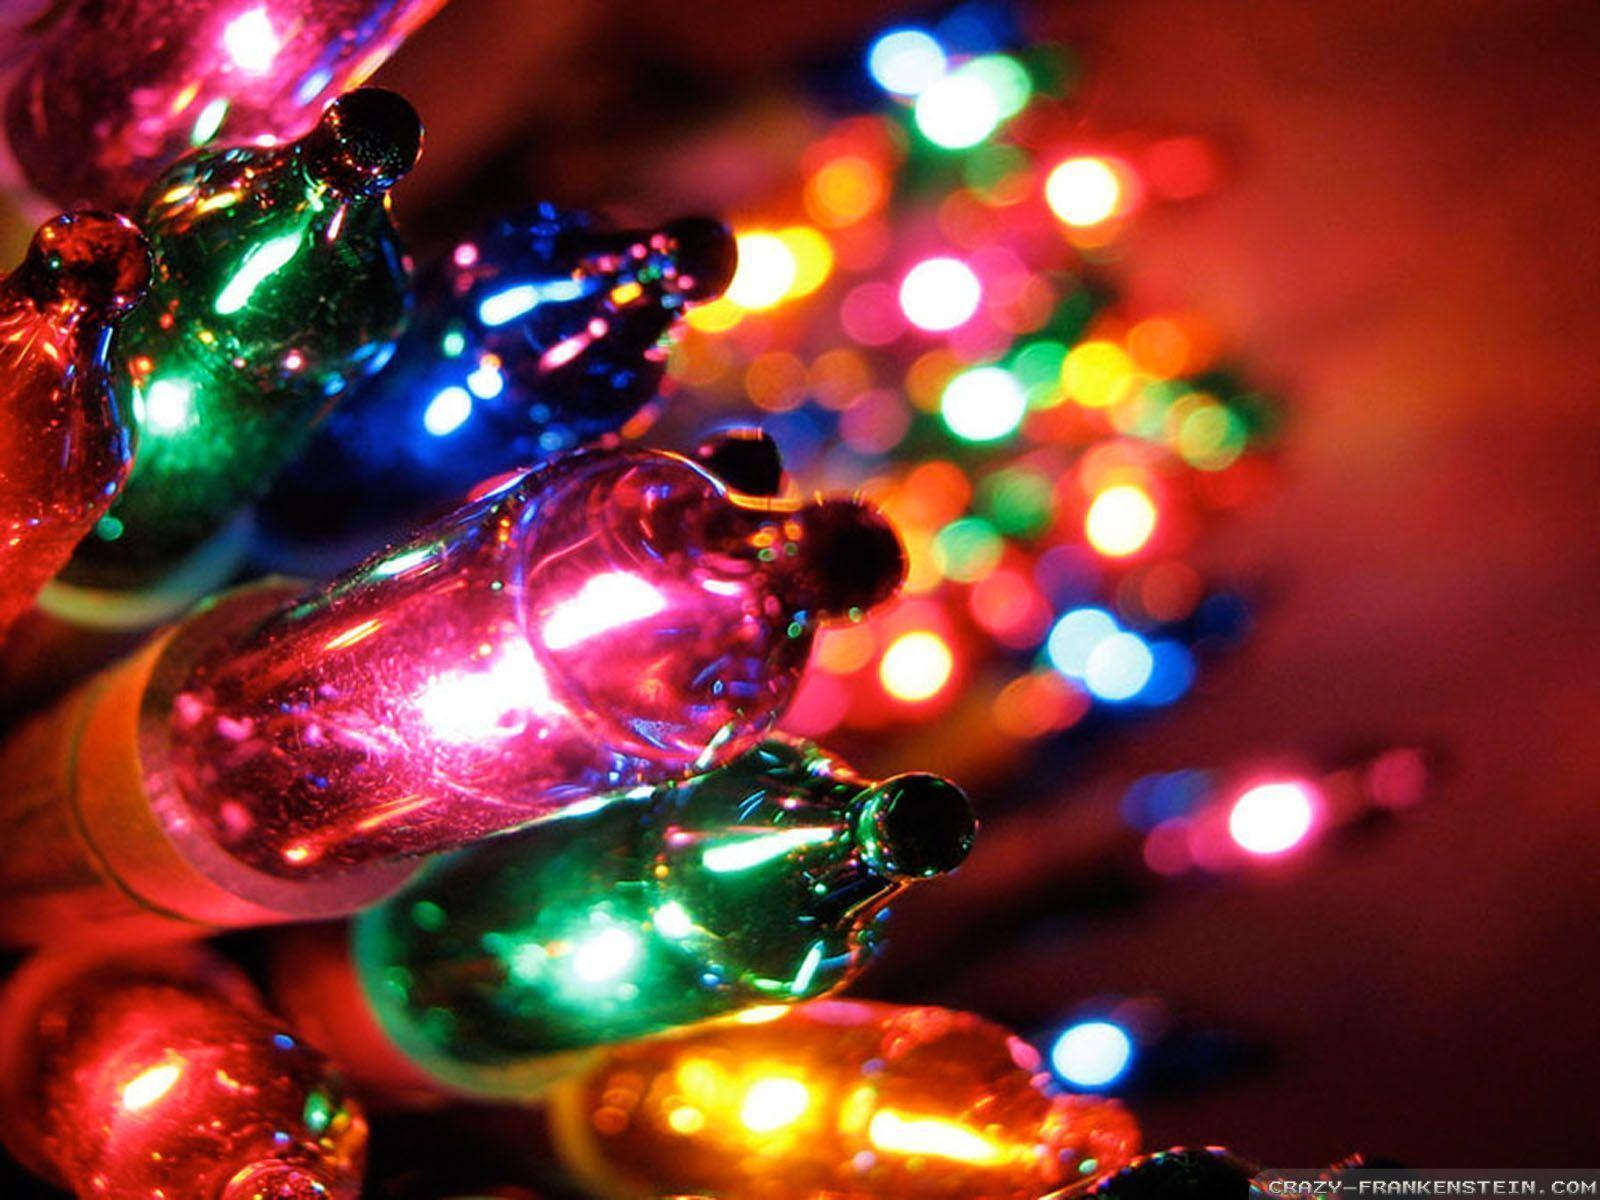 A close up of many colorful christmas lights - Christmas lights